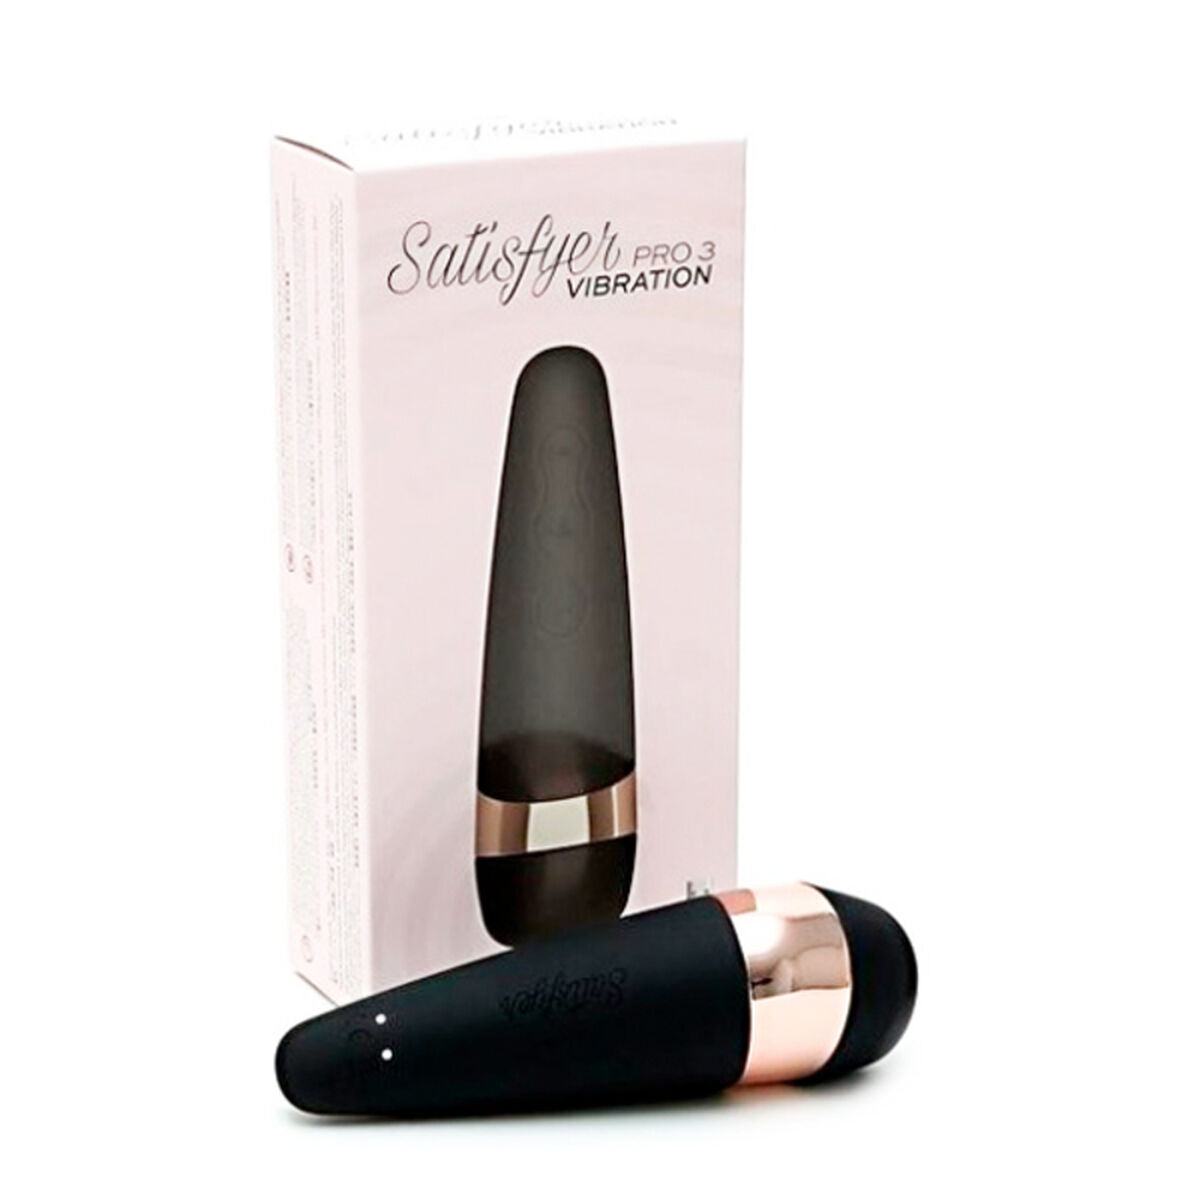 Kaufe Pro 3 Klitoris Stimulator Vibration Satisfyer SF-J2018-32 bei AWK Flagship um € 52.00